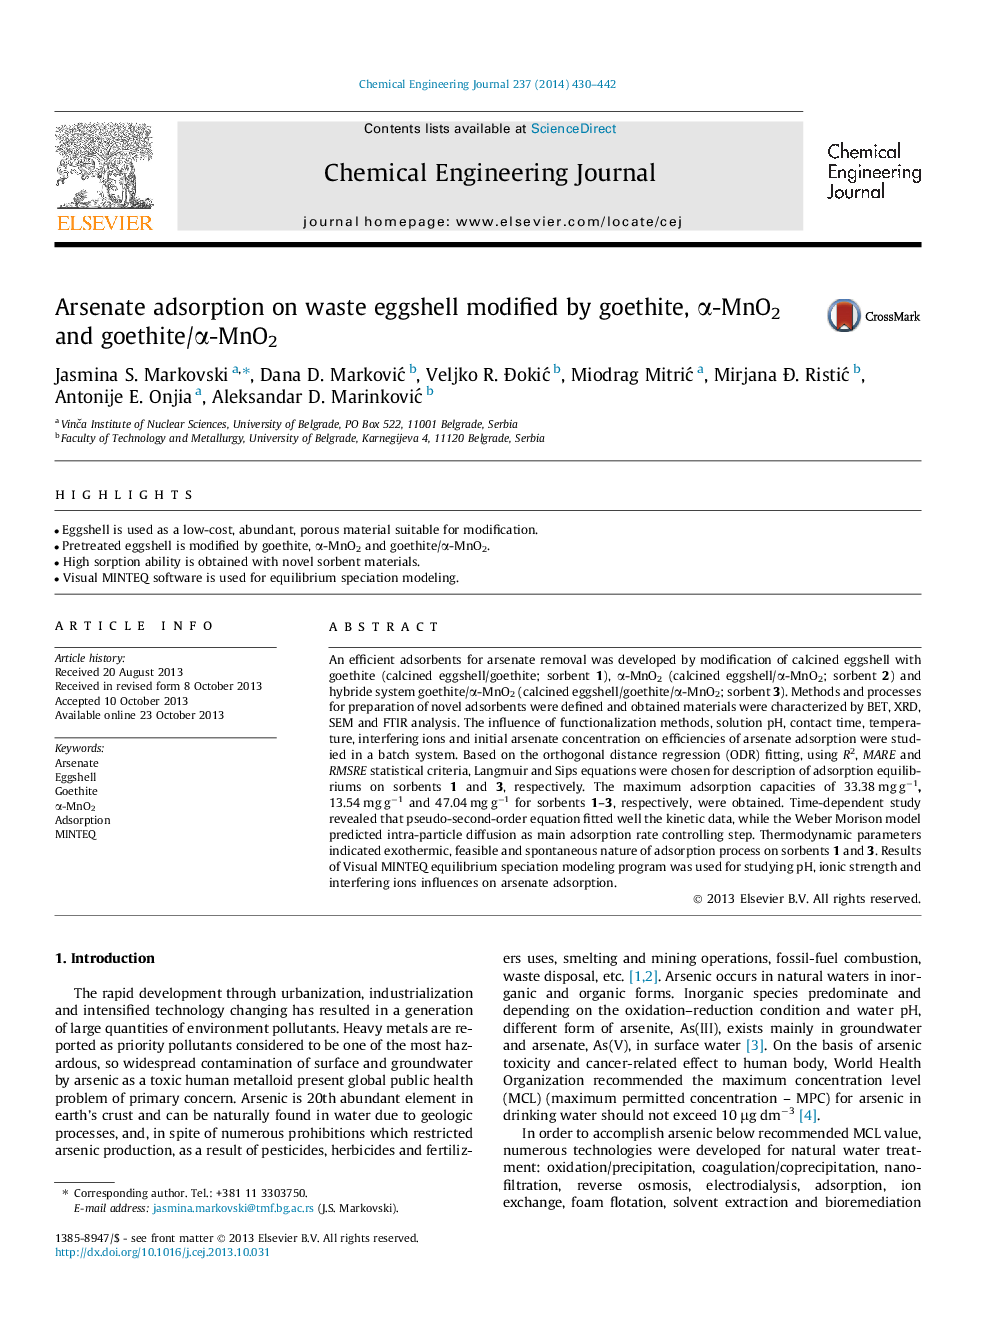 Arsenate adsorption on waste eggshell modified by goethite, α-MnO2 and goethite/α-MnO2